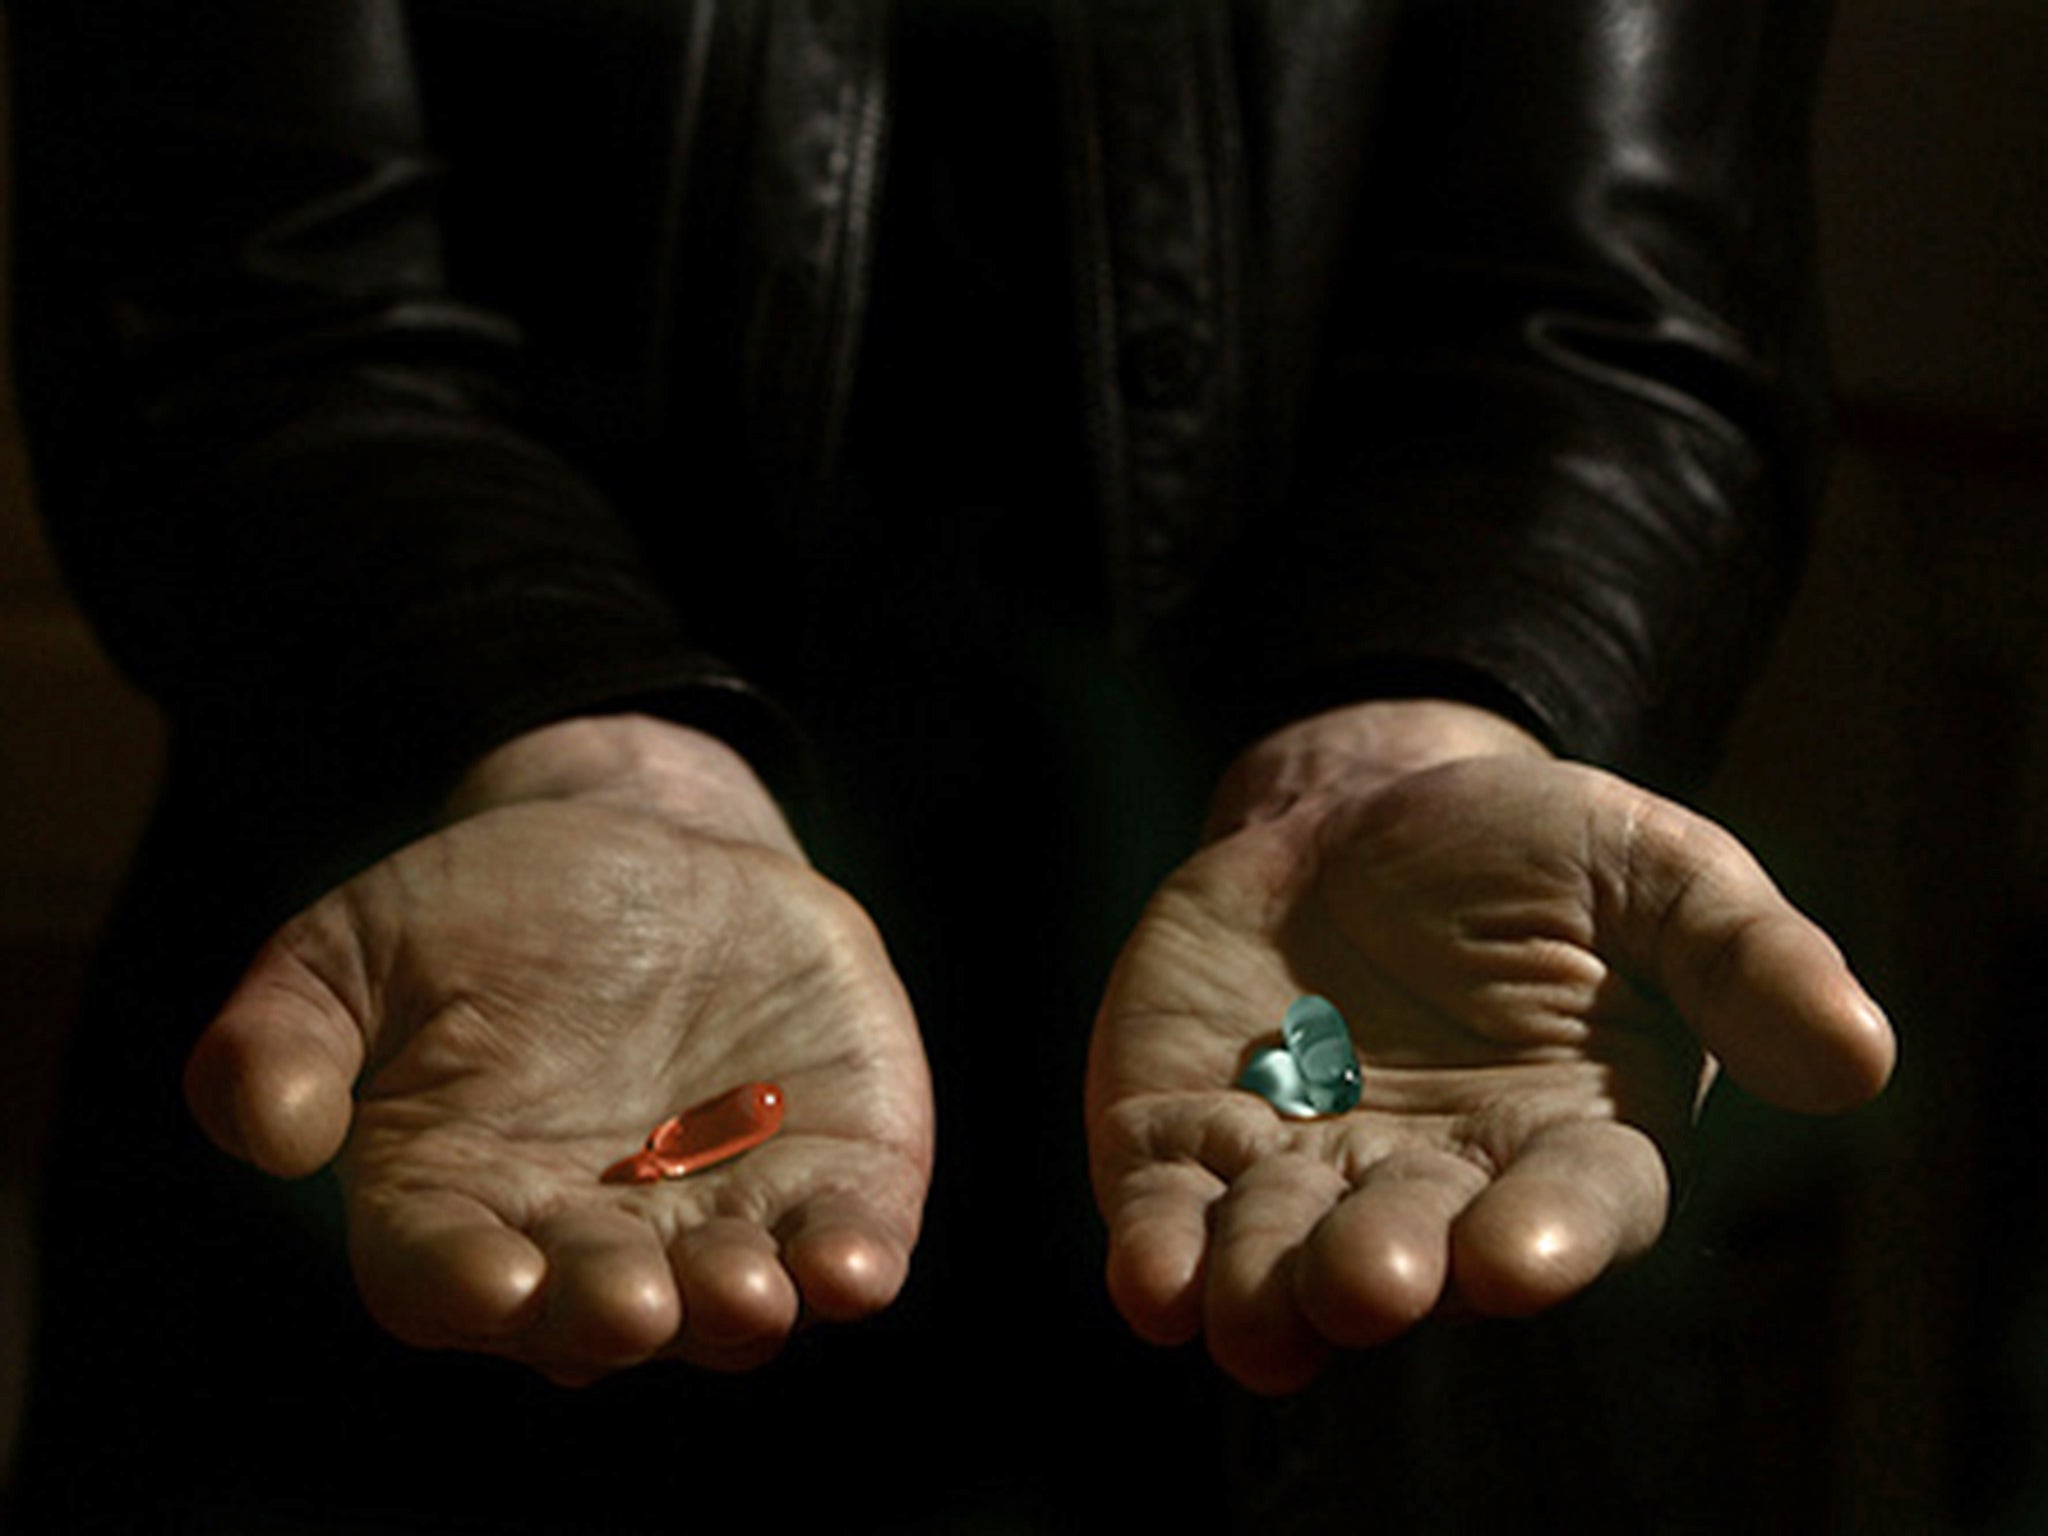 Red pill or blue pill, progress or resignation? Modern life presents its own matrix